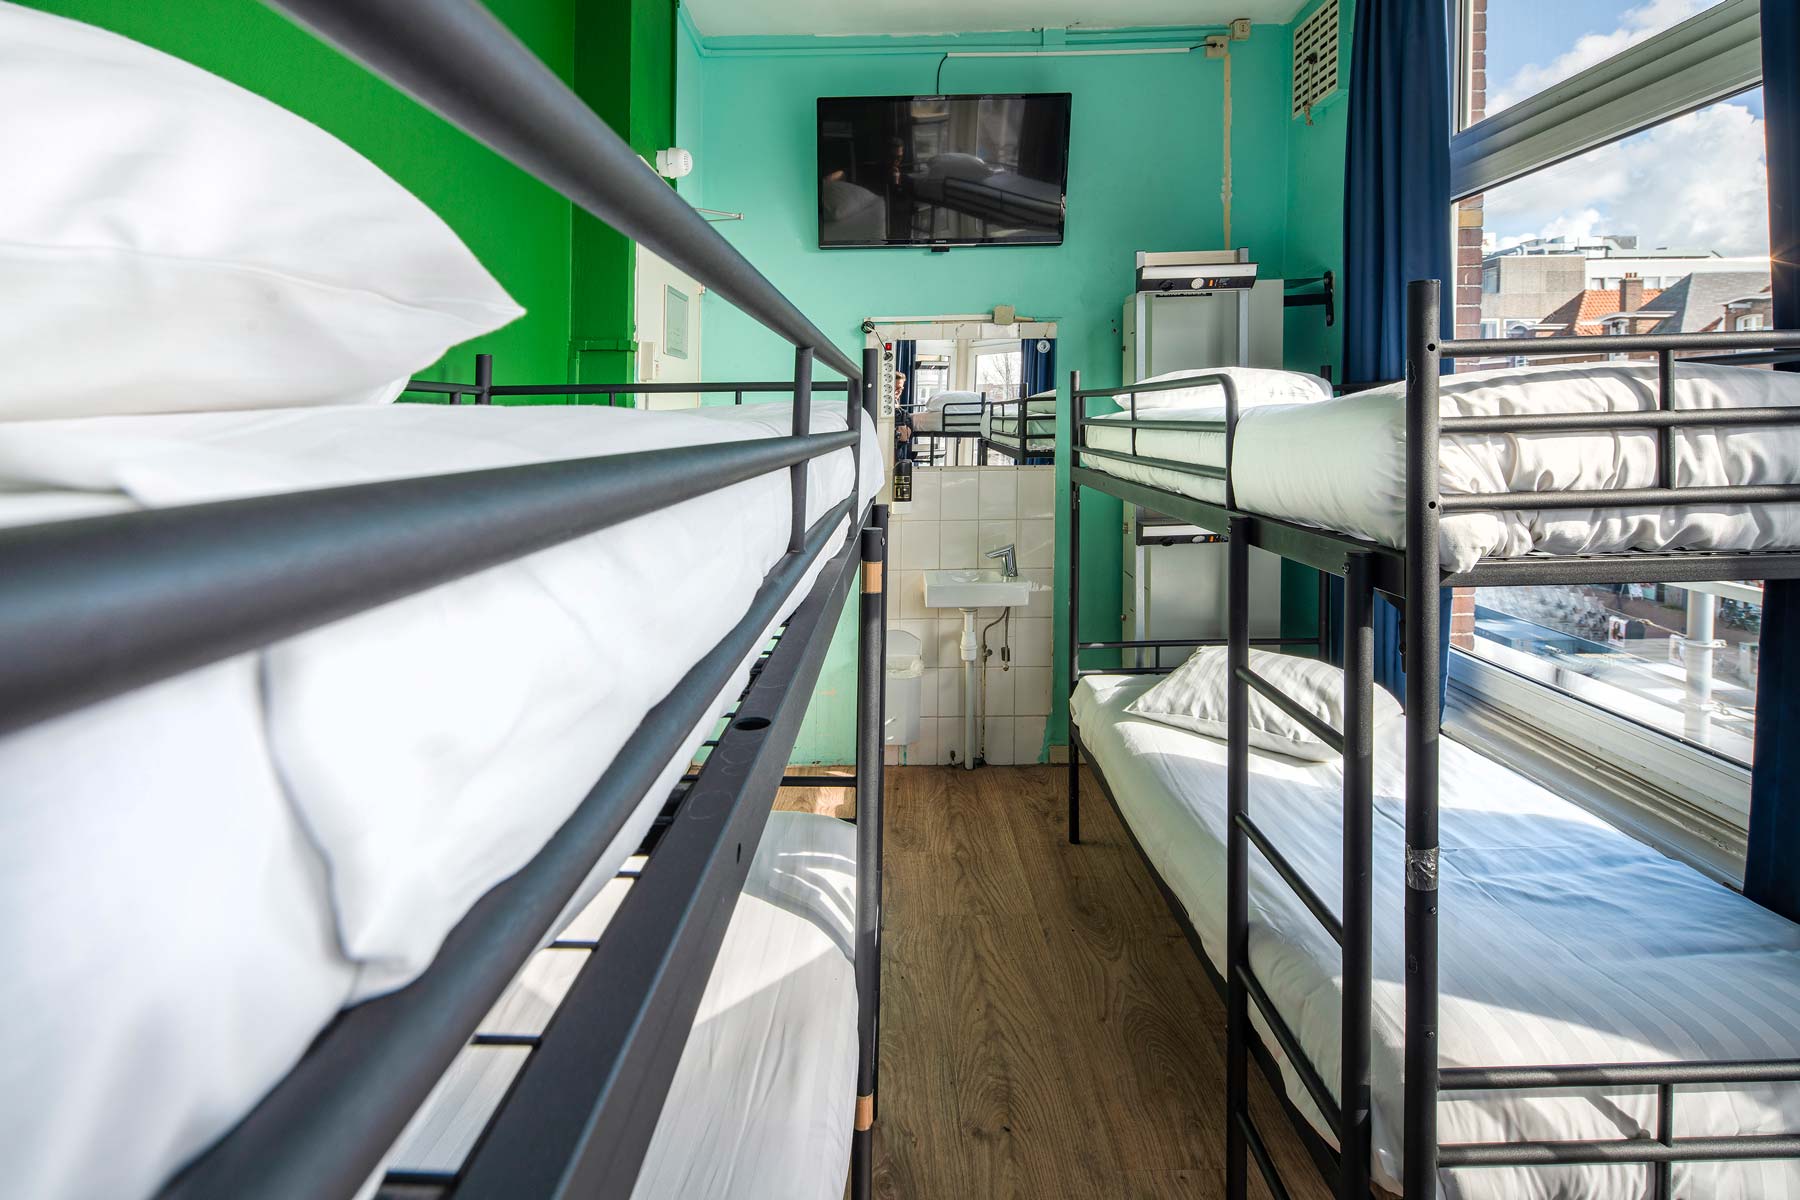 cheap hostel dorm in amsterdam